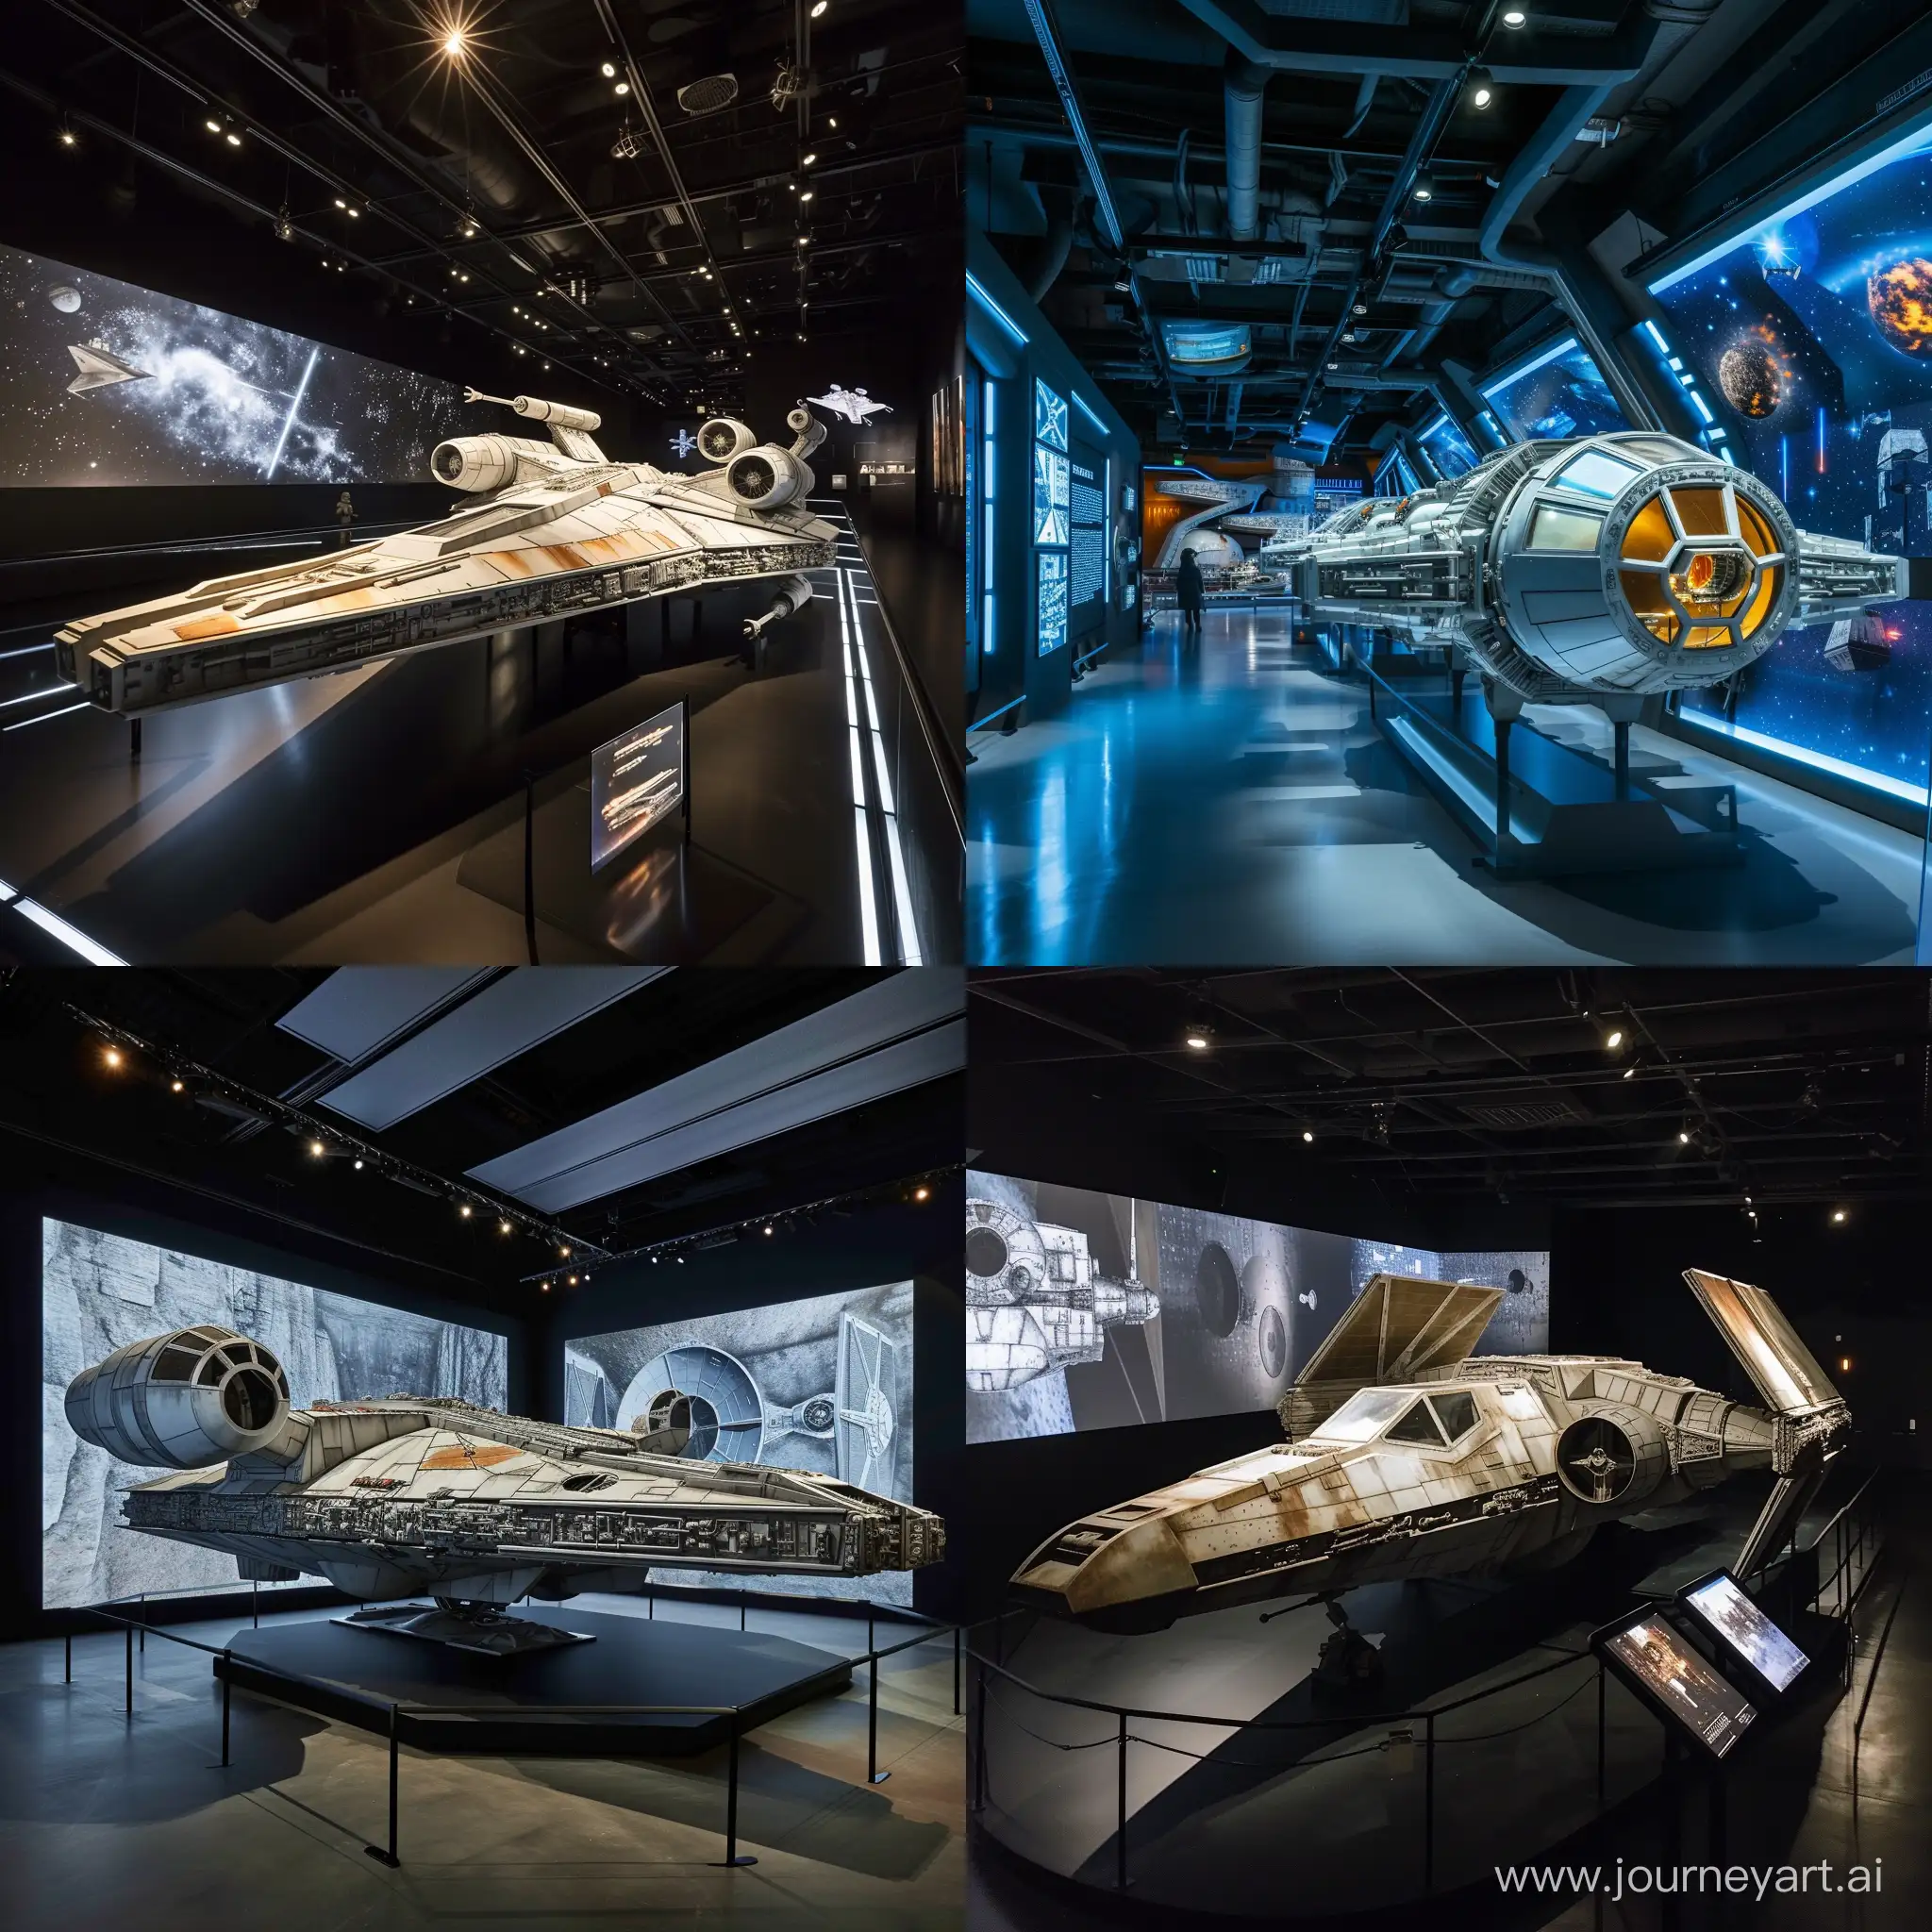 Futuristic-Spaceship-Displays-Intergalactic-Marvels-in-Star-Wars-Style